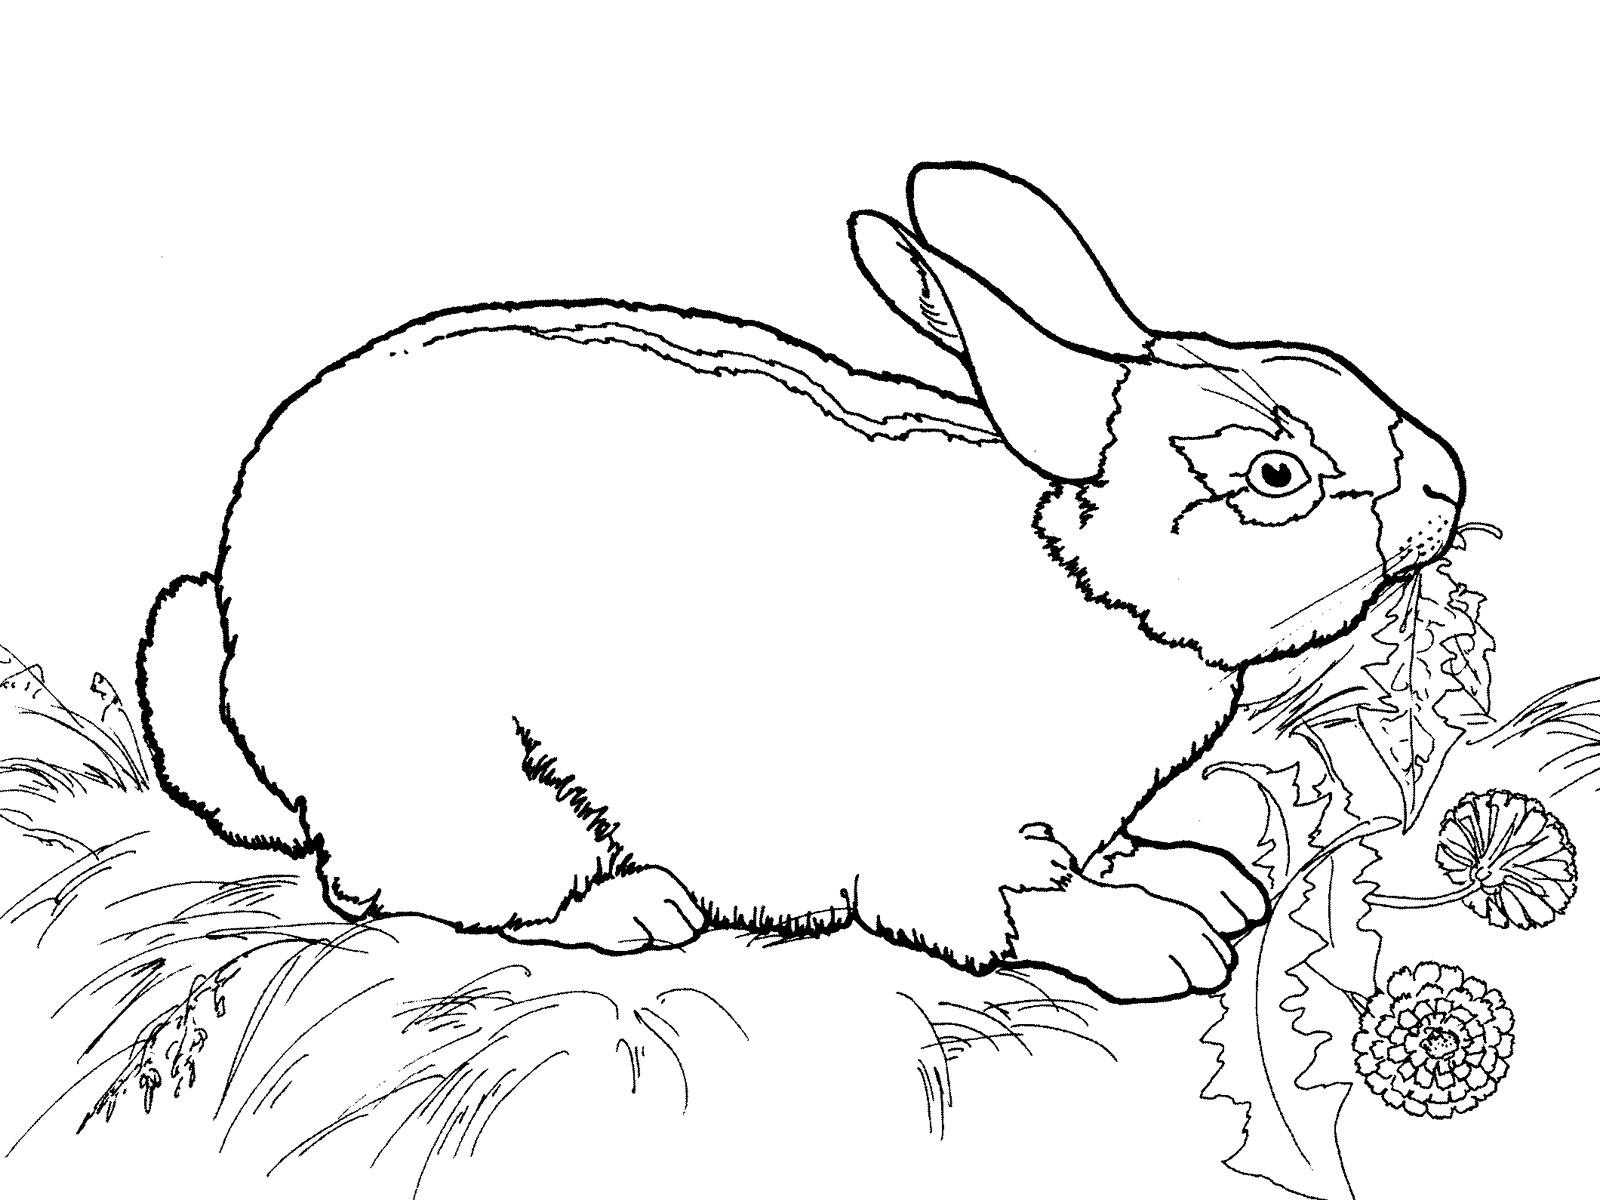 Название: Раскраска Заяц поедает траву. Категория: Животные. Теги: заяц, трава, цветы.